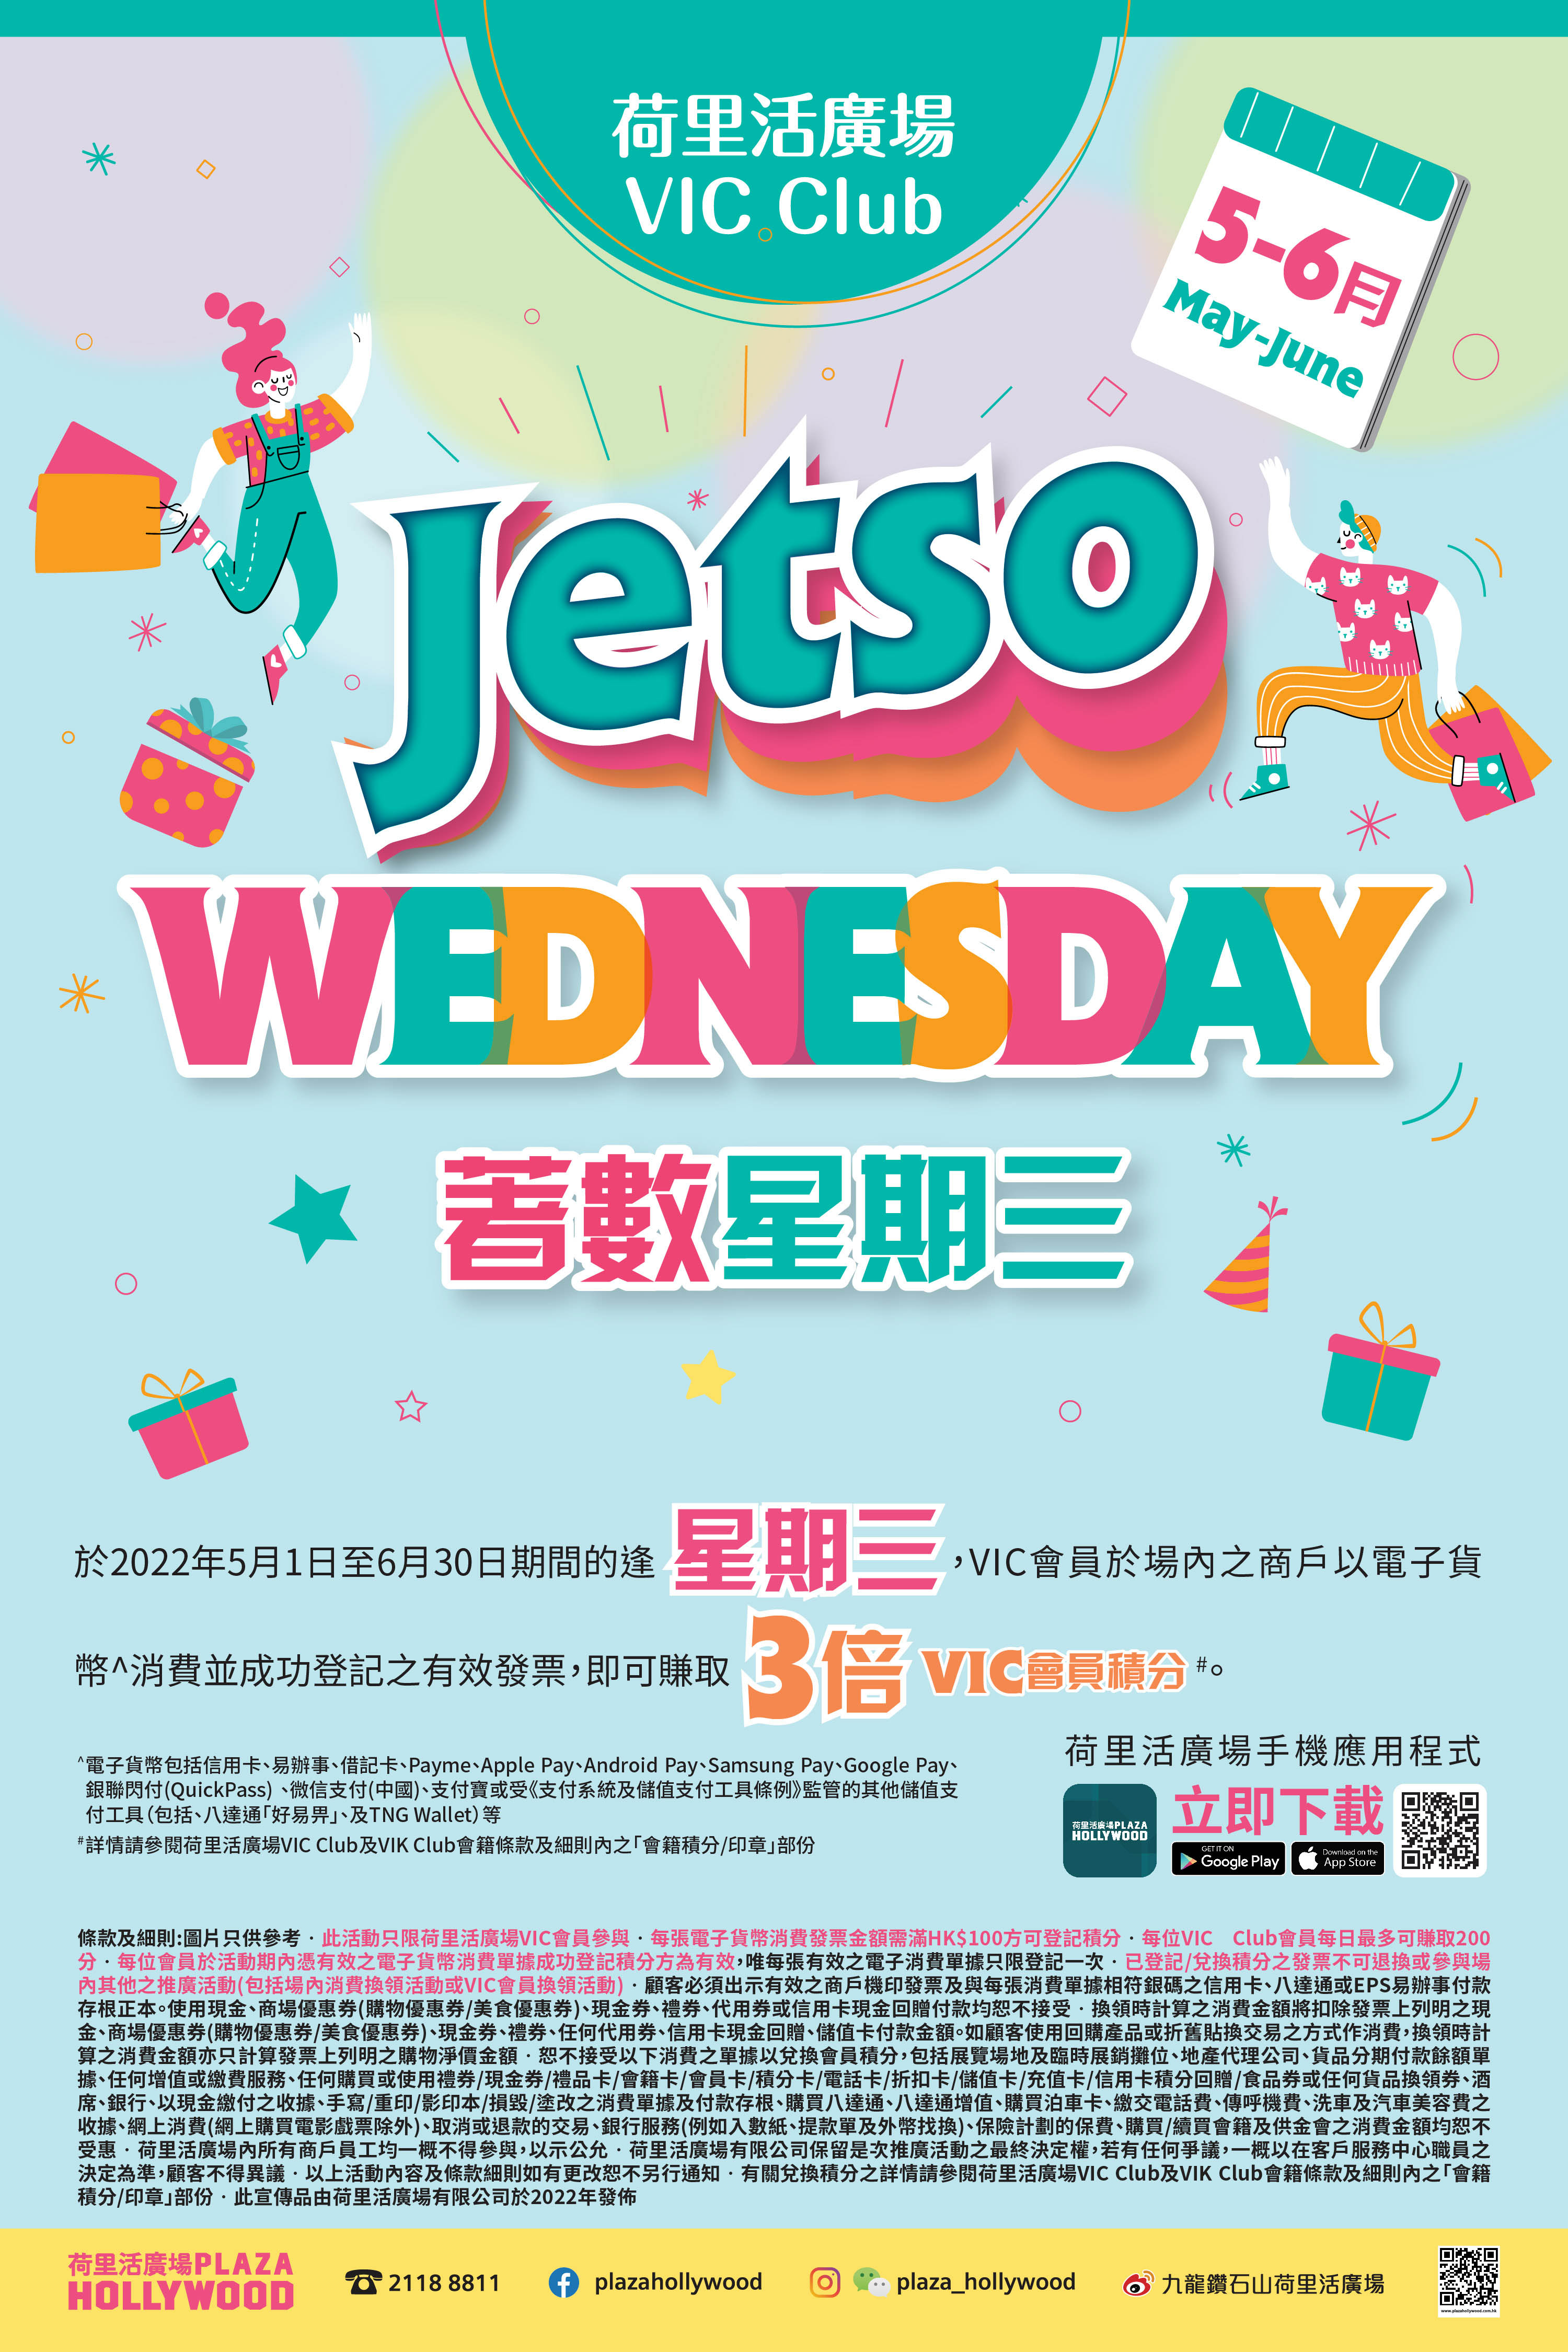 Jetso Wednesday (May-Jun)